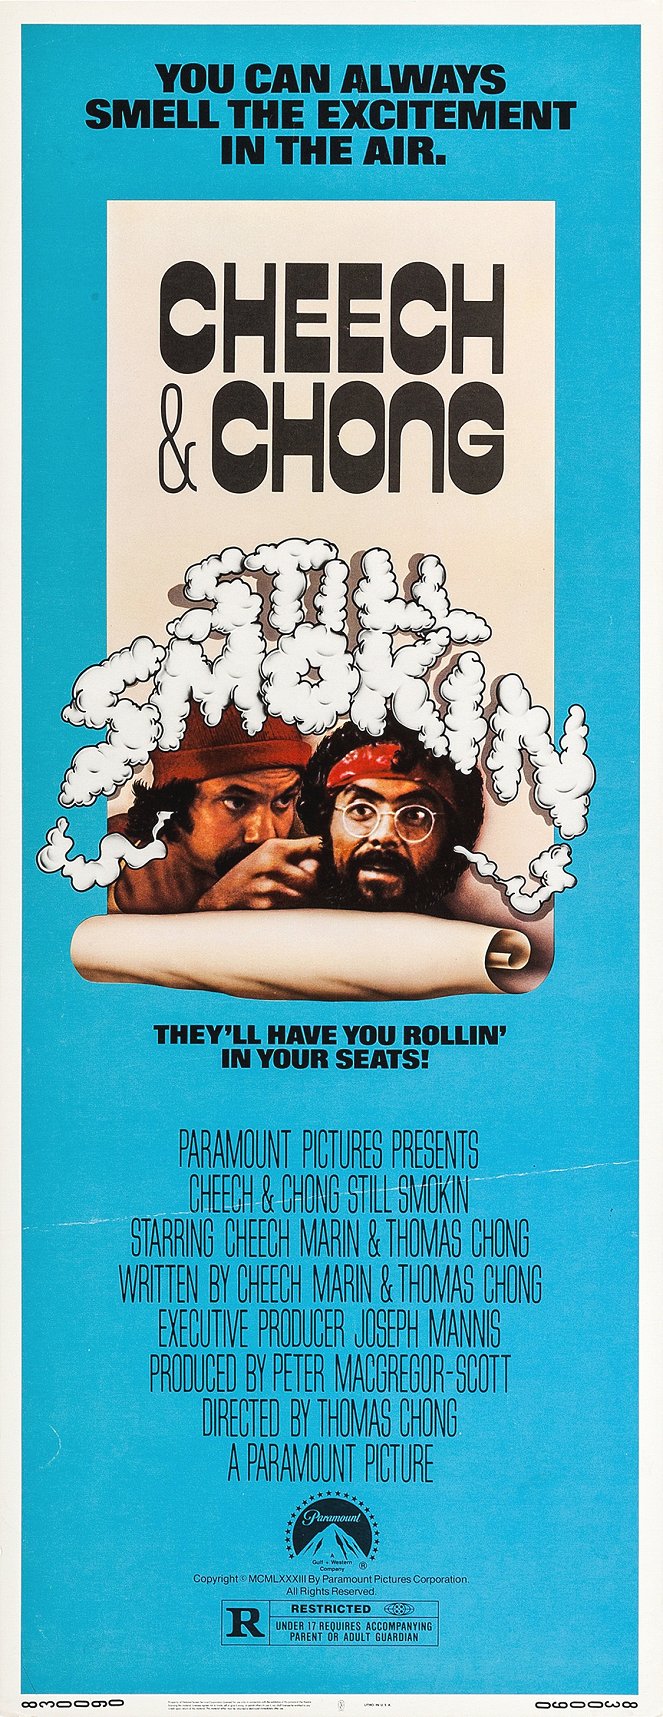 Still Smokin - Posters